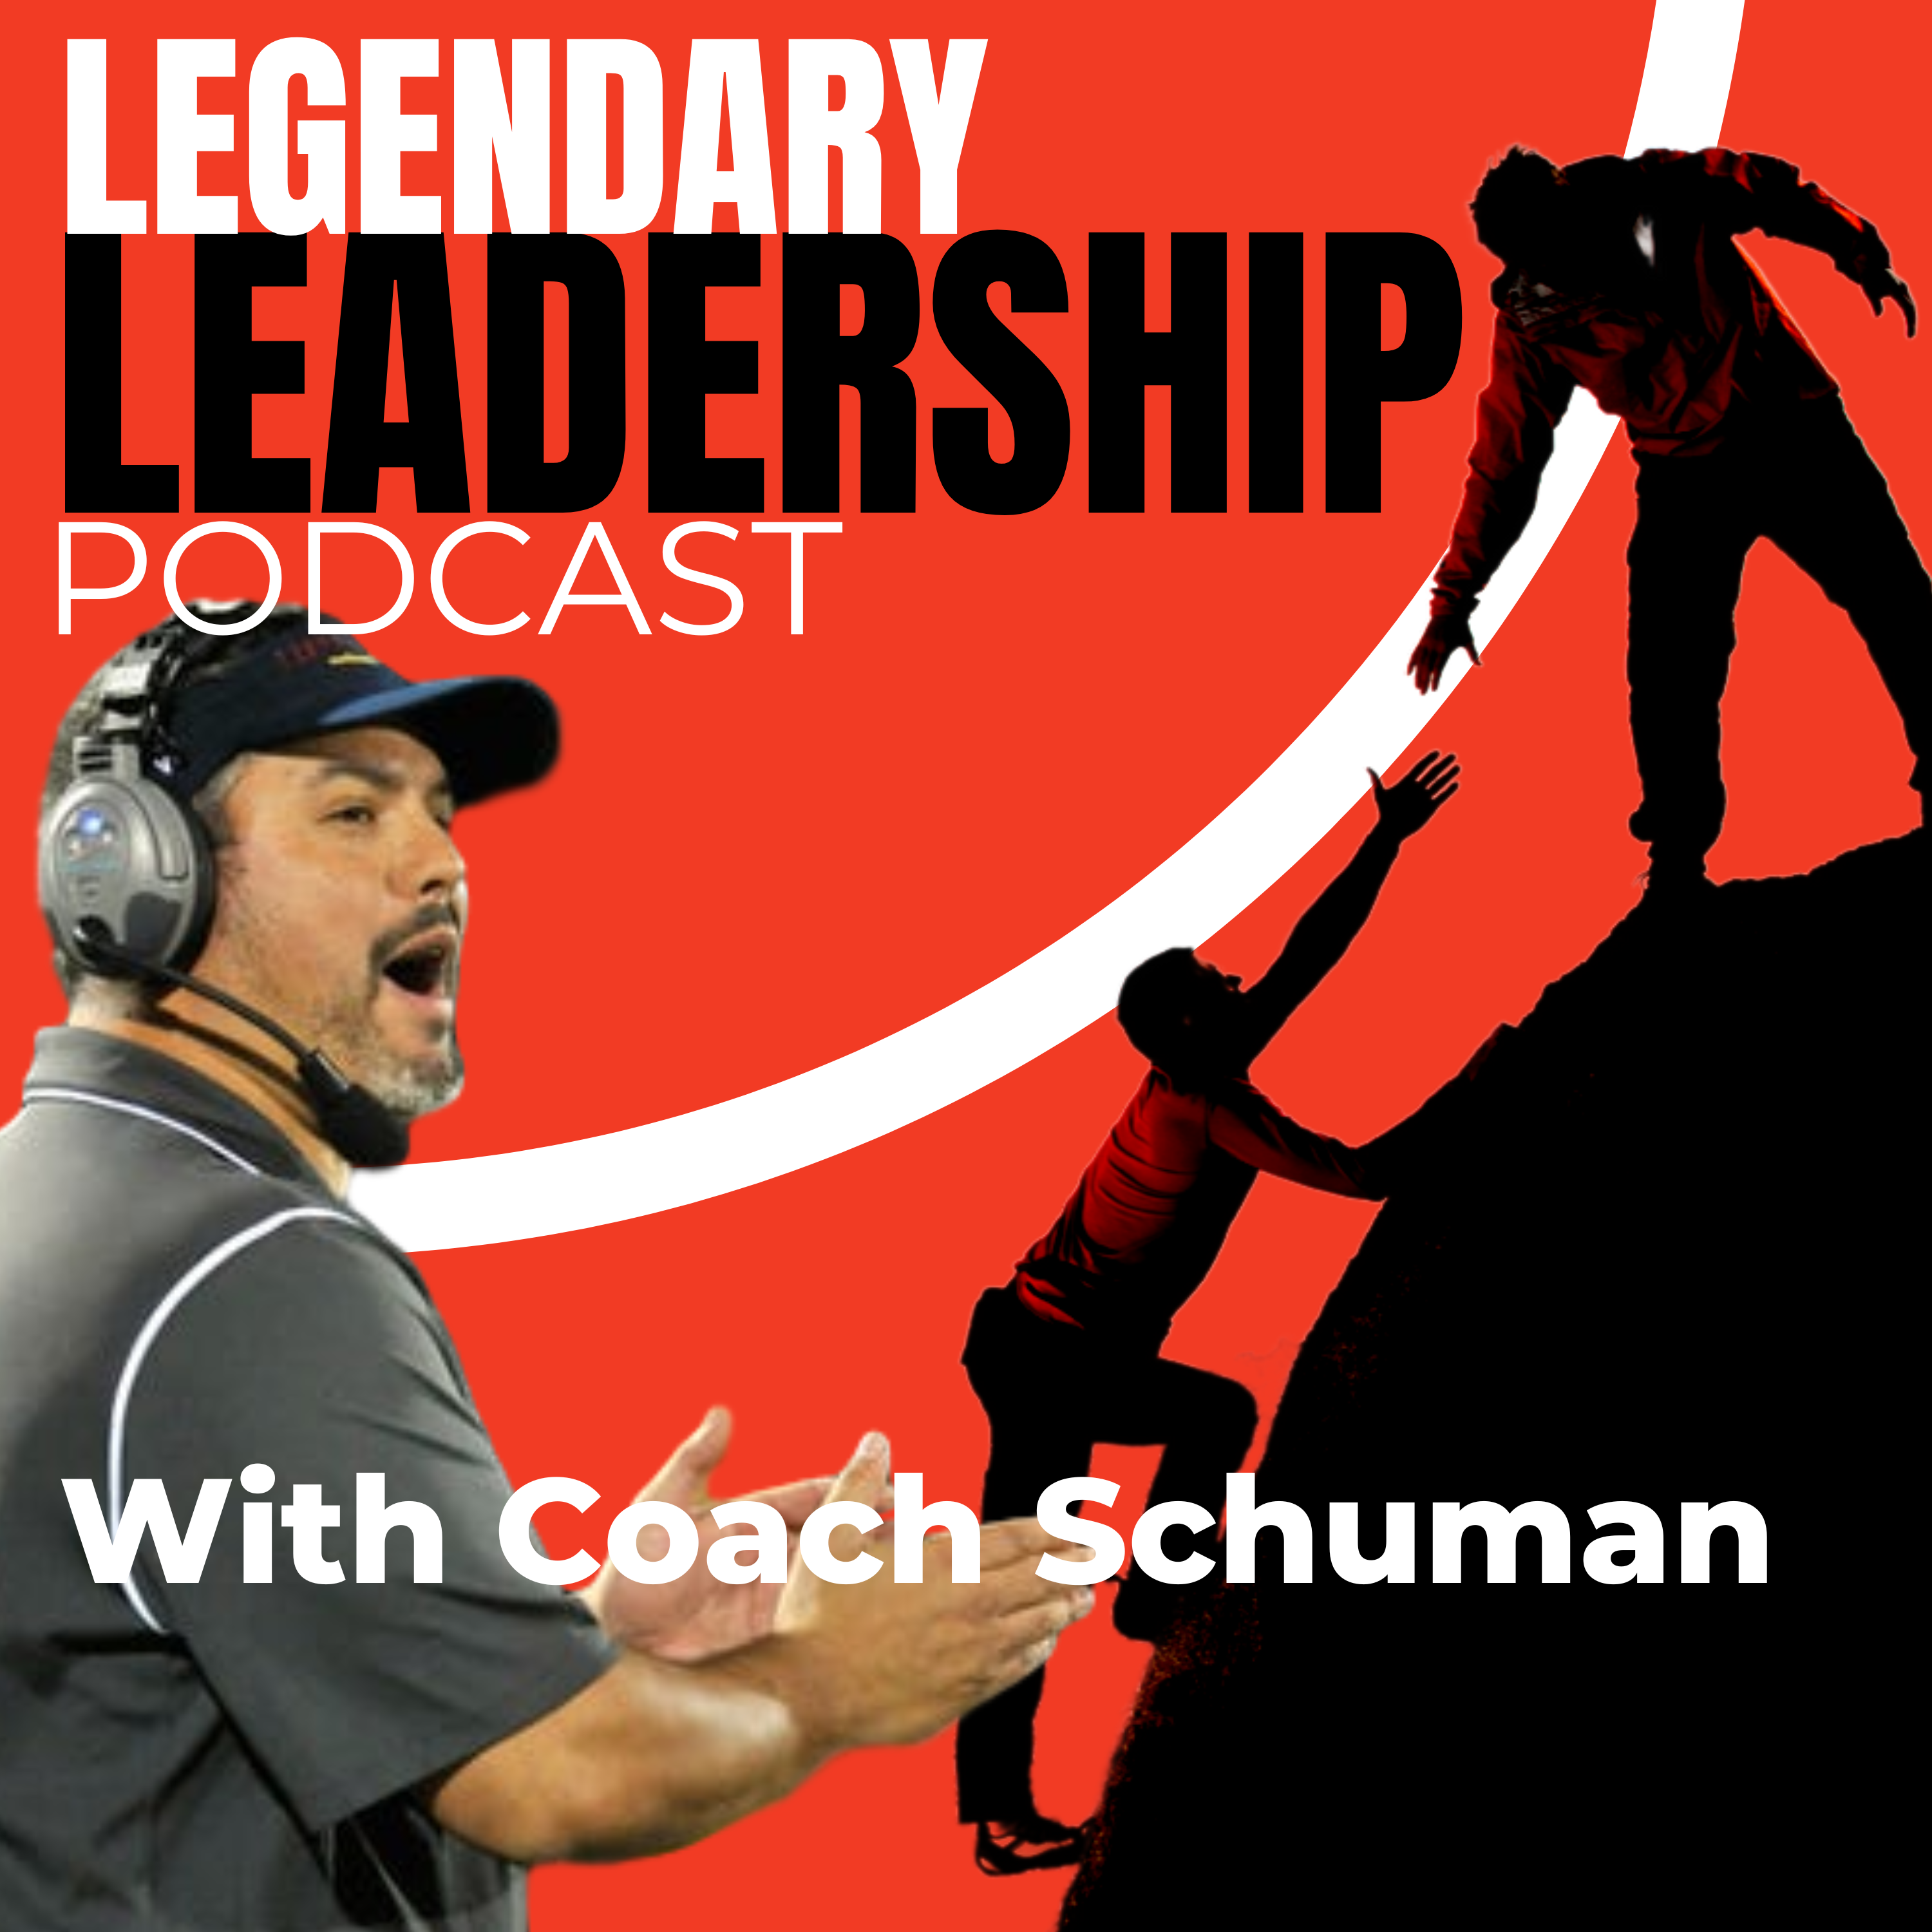 Coach Schuman's Legendary Leadership Podcast